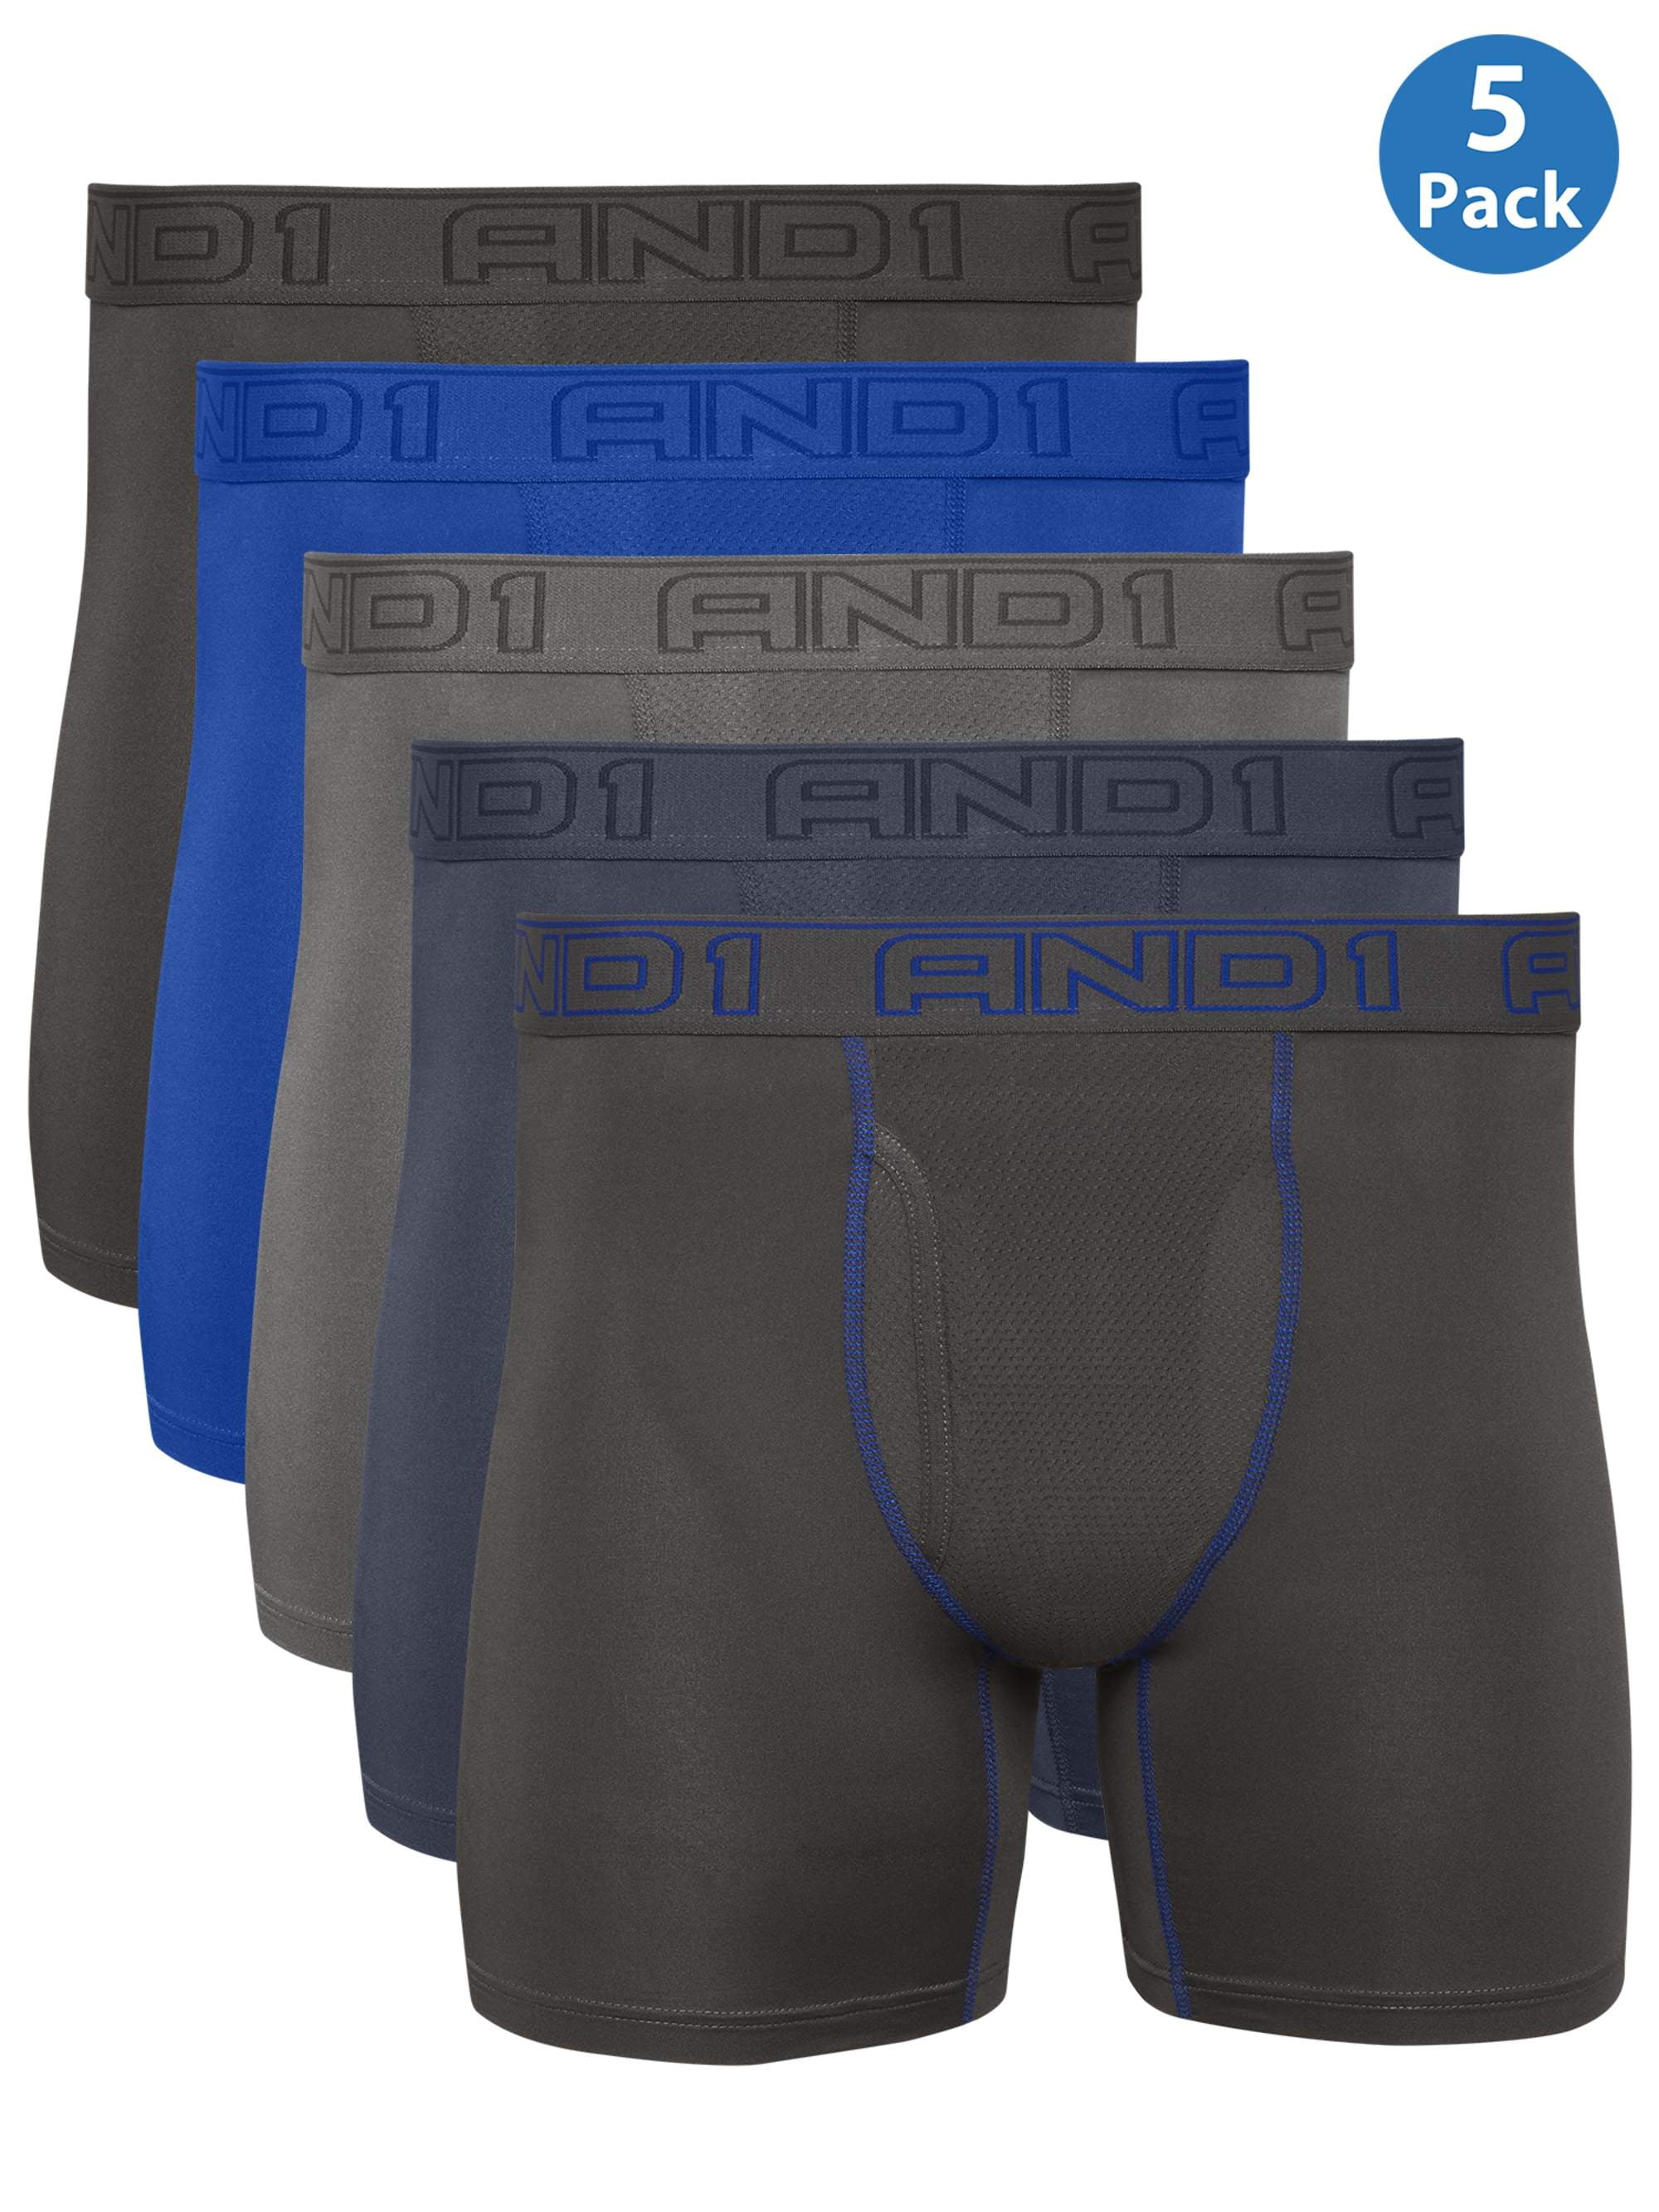 AND1 Men's Underwear - Long Leg Performance Compression Boxer